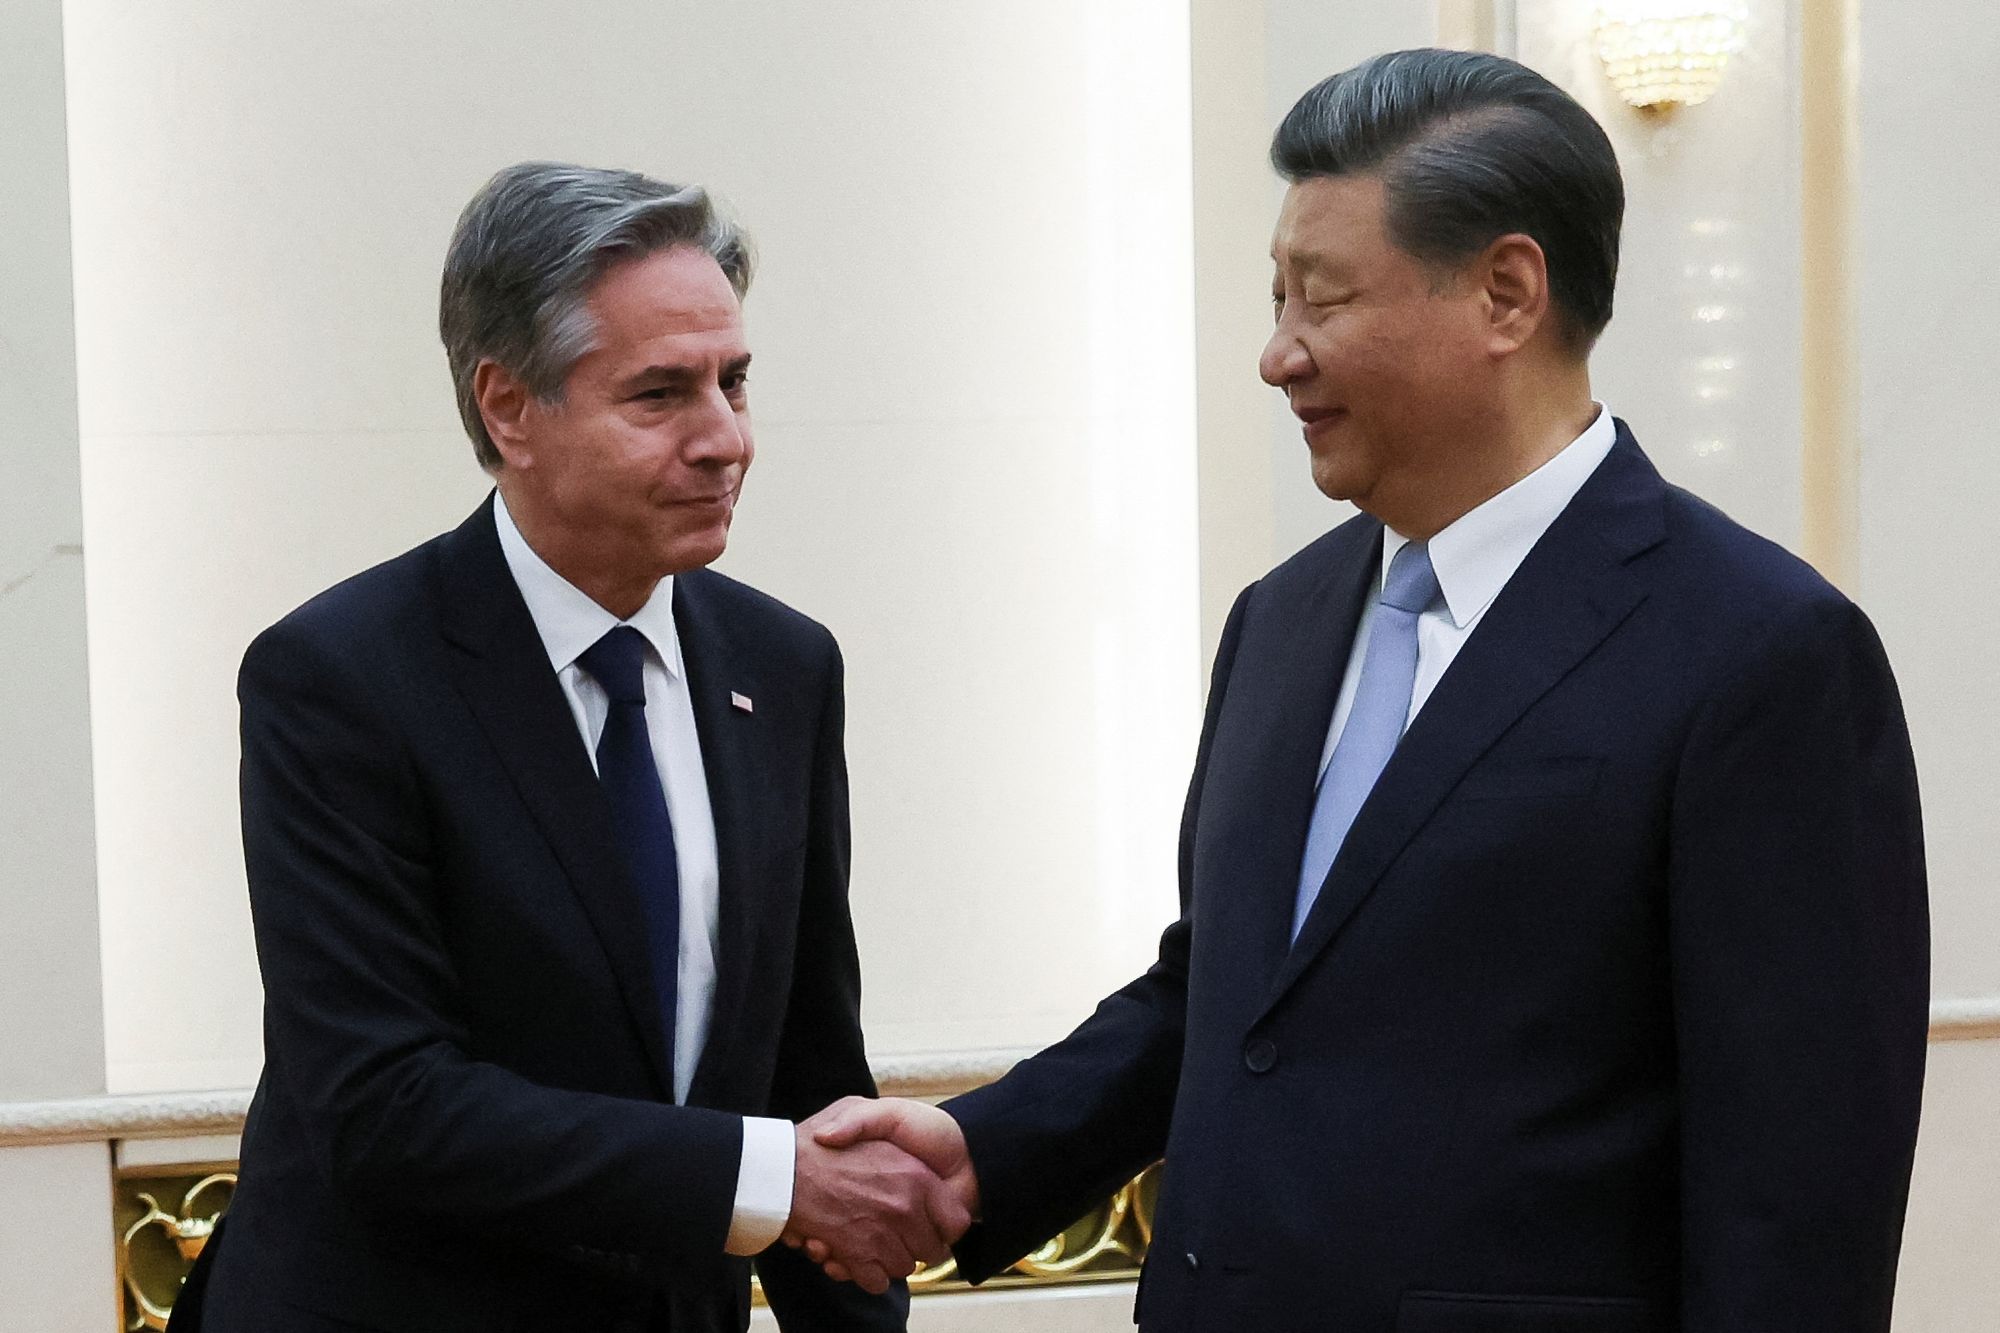 US Secretary of State Antony Blinken met with China President Xi Jinping